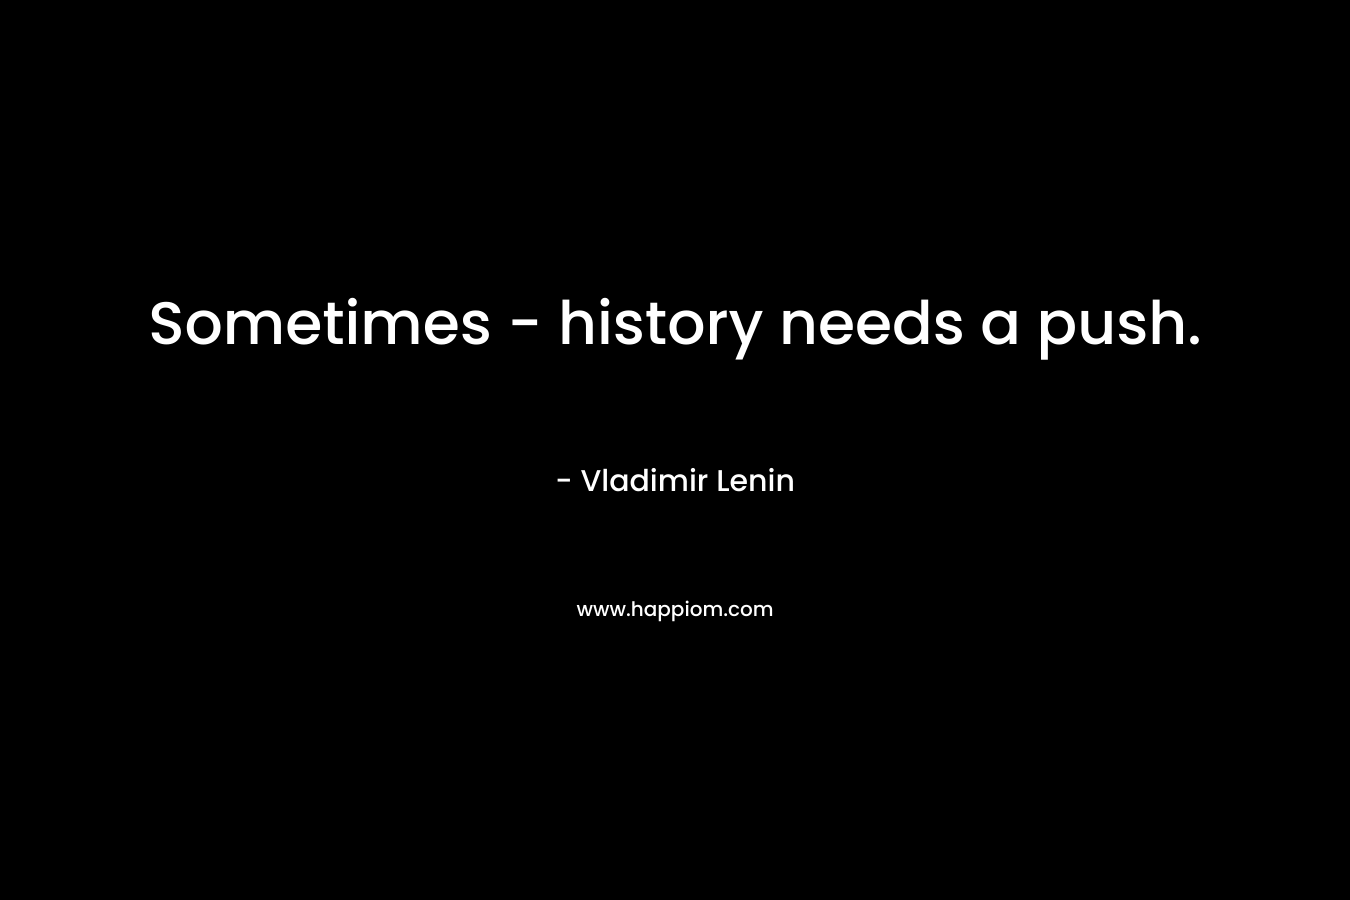 Sometimes - history needs a push.